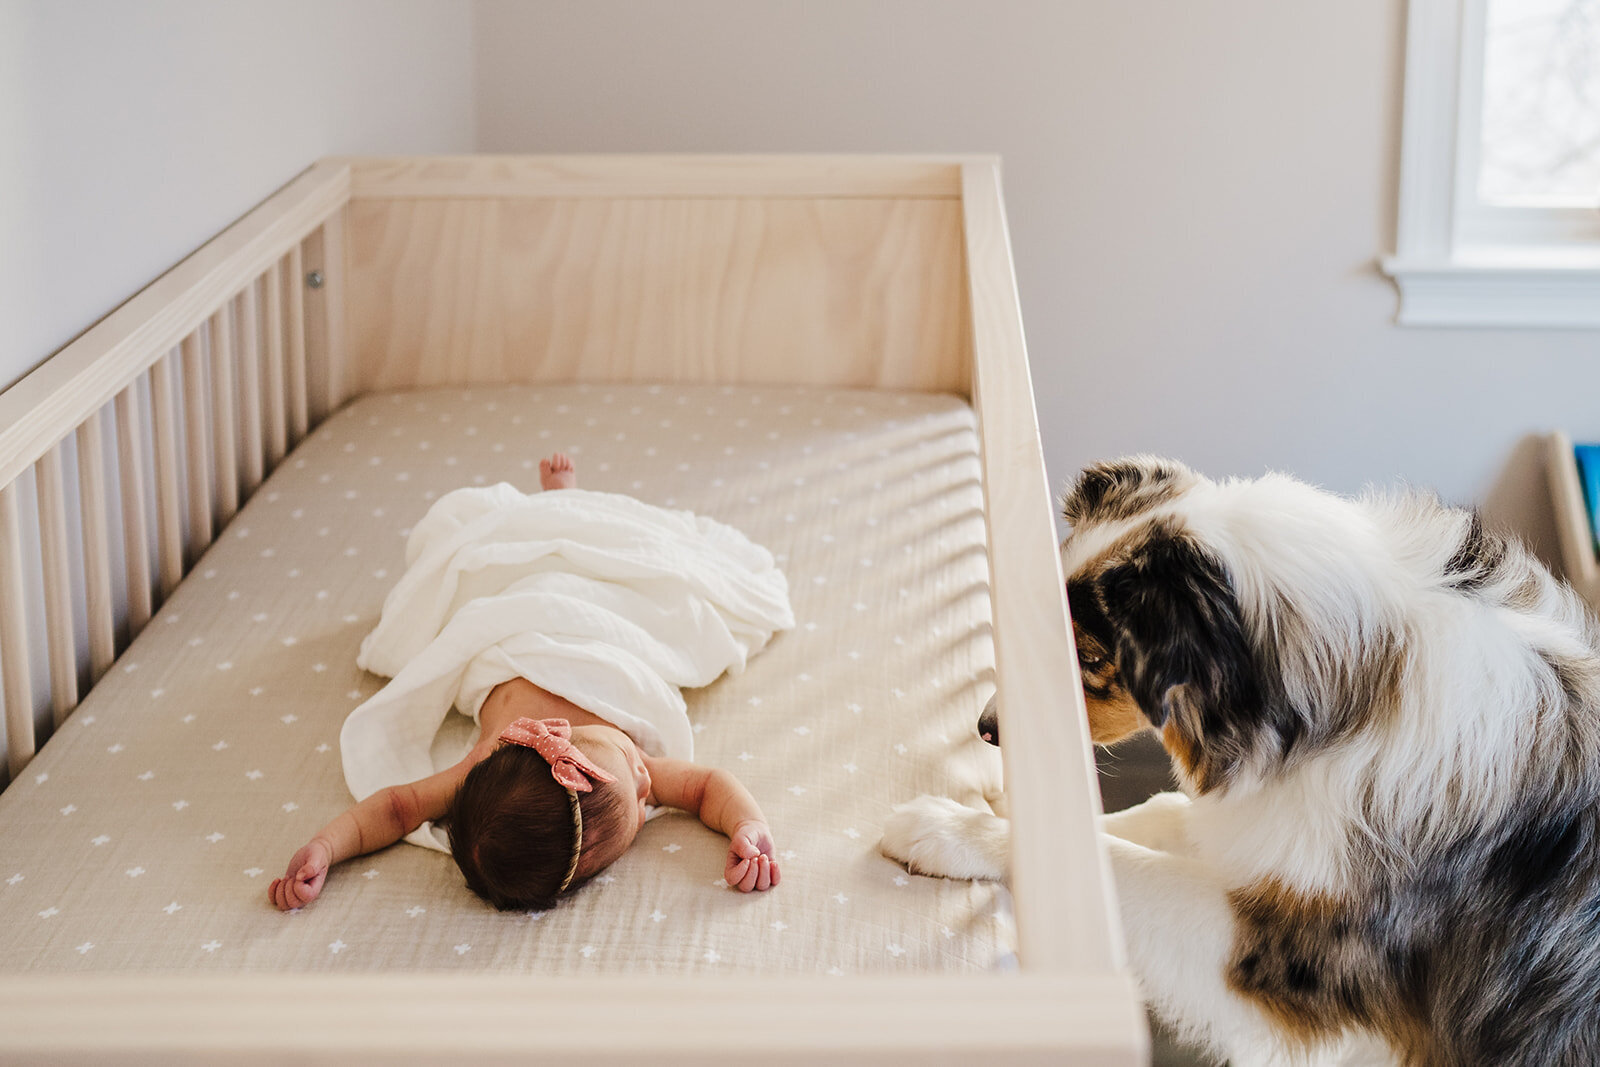 dog peeks into crib where newborn sleeps